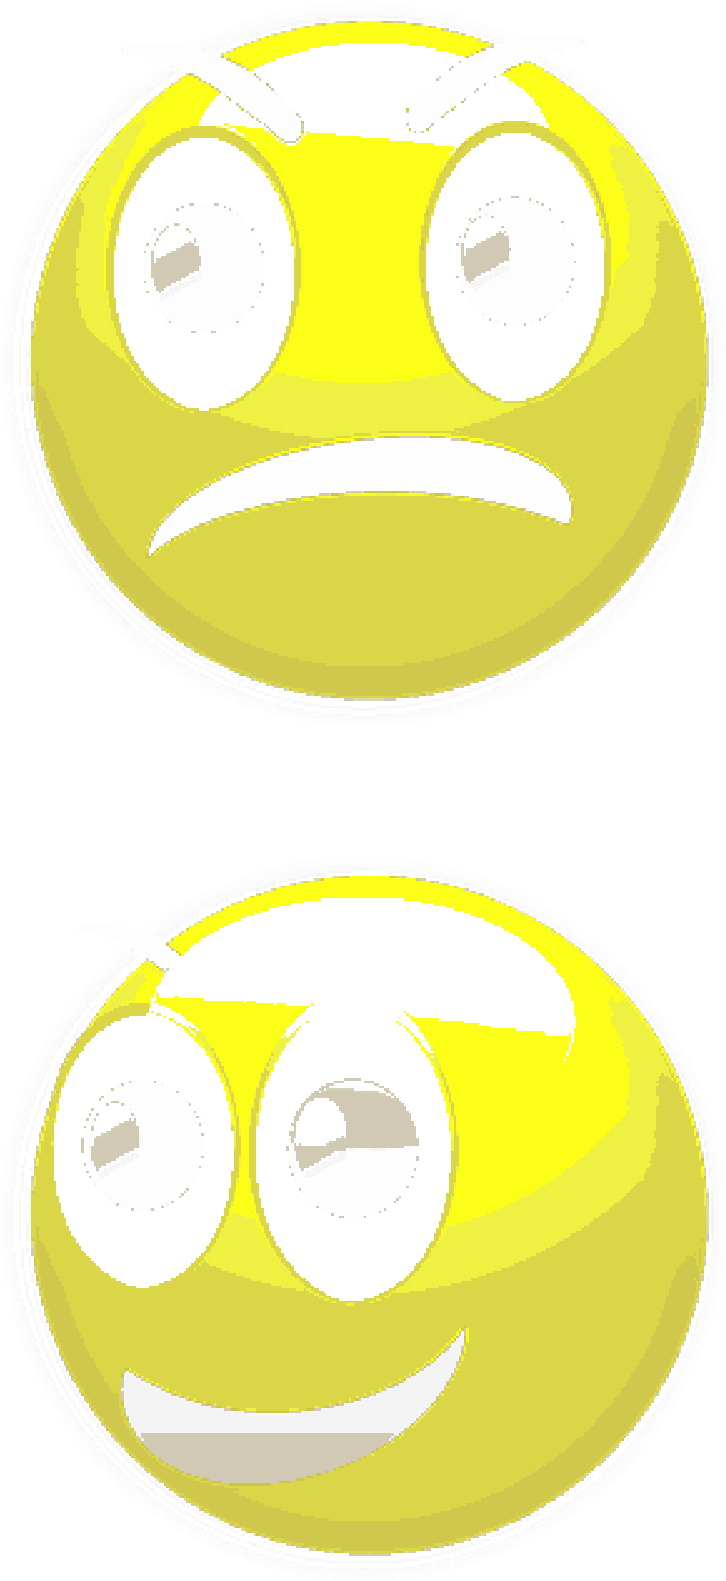 A Yellow Smiley Face With A Sad Face